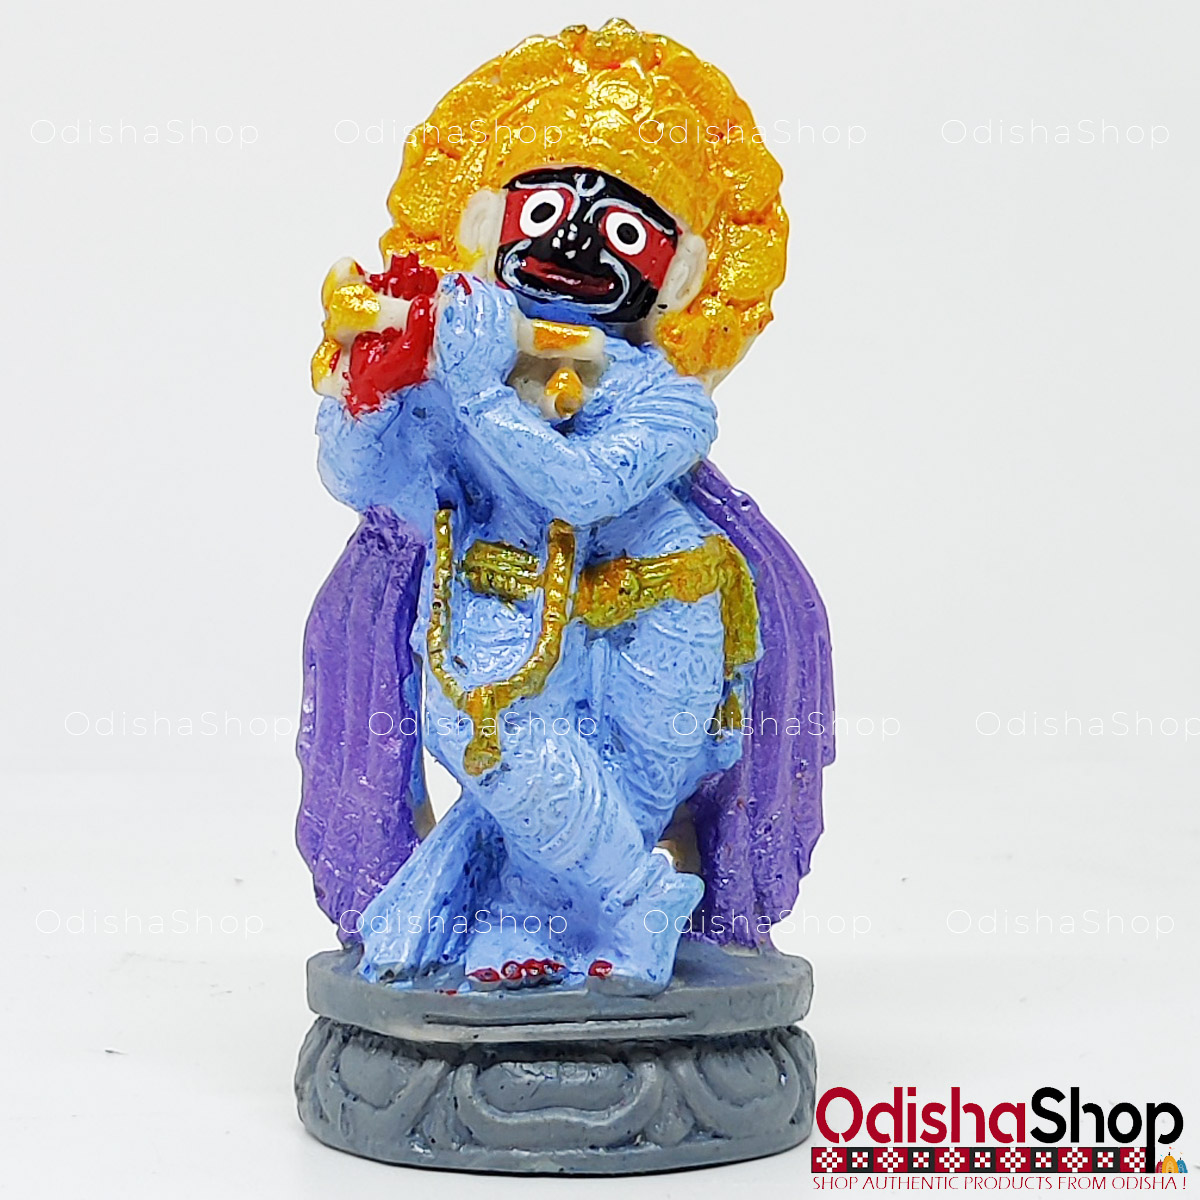 Lord Jagannath Krishna Avatar Idol For Puja Gifting Car Dashboard Home Decor